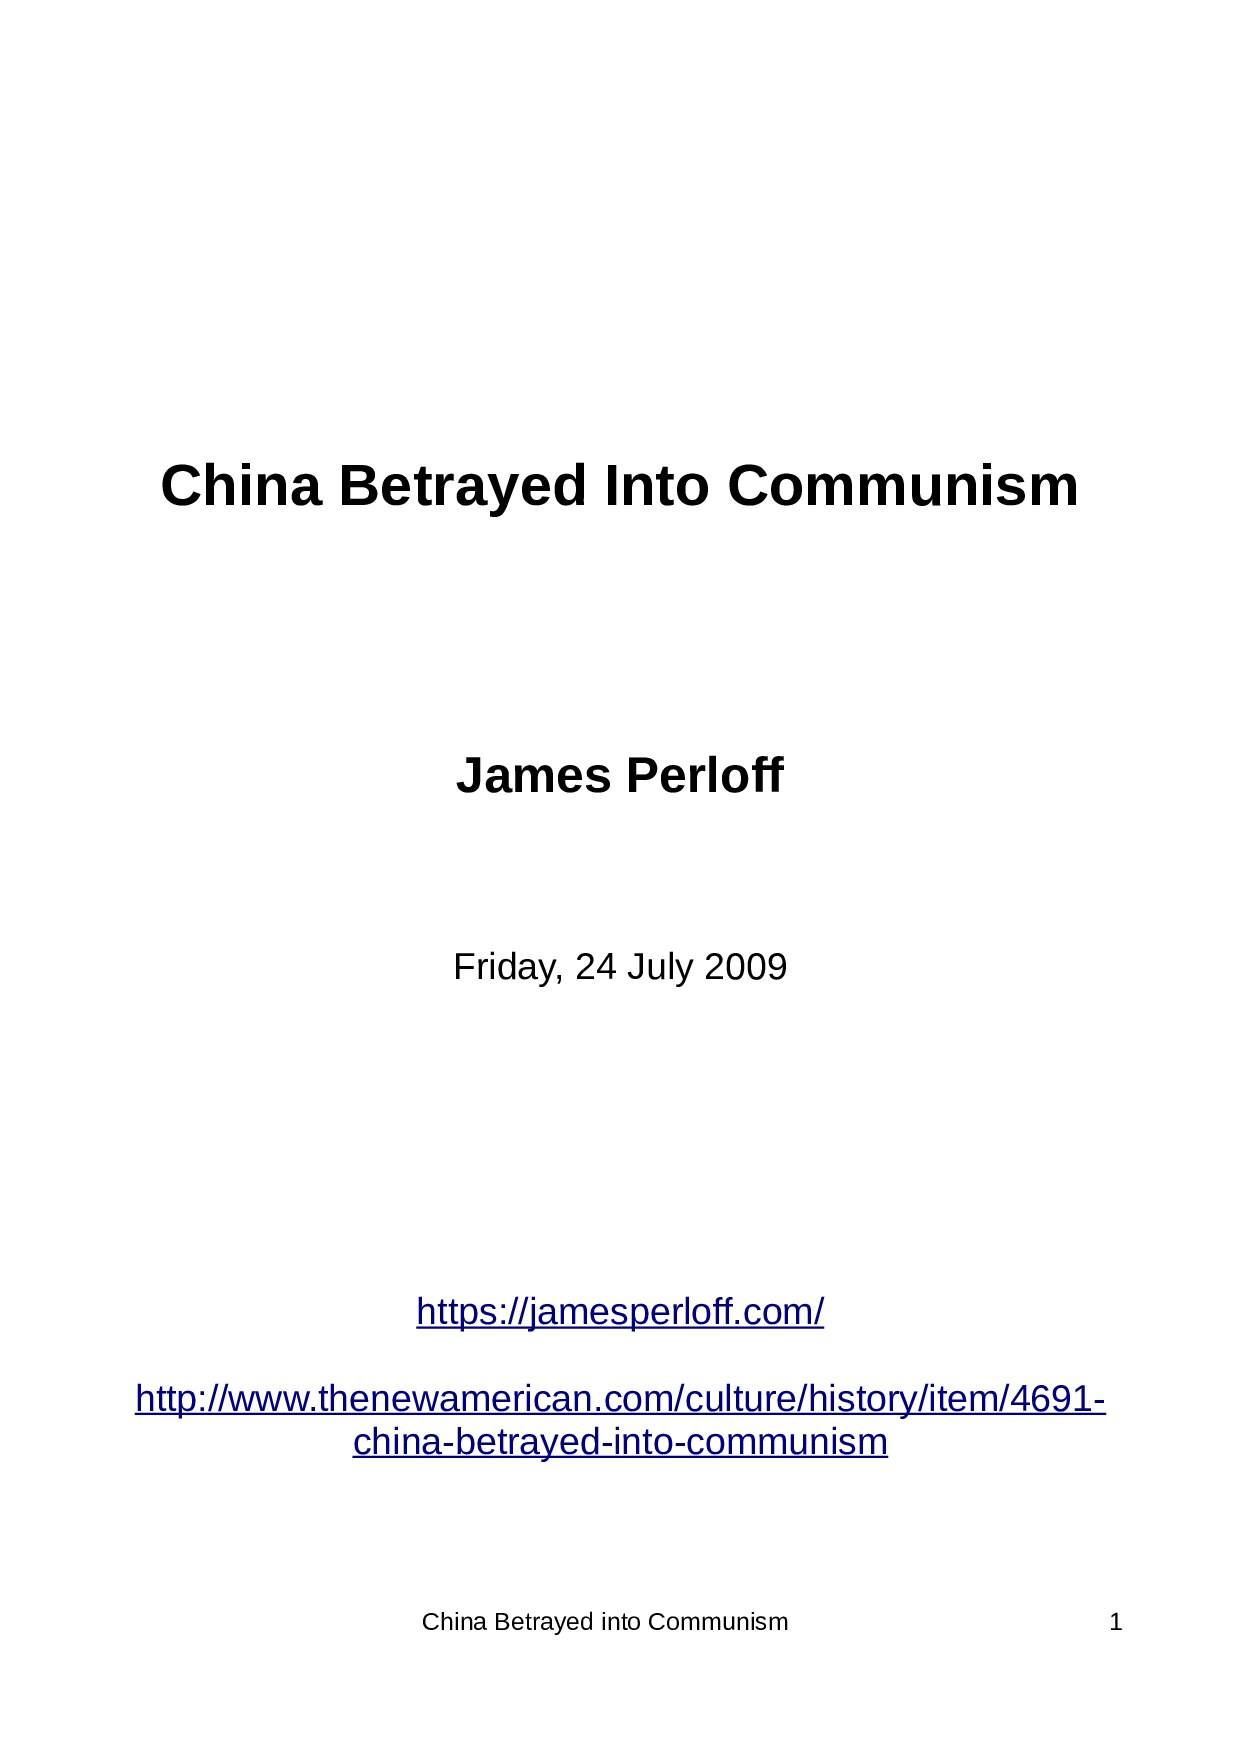 Perloff, James; China Betrayed into Communism